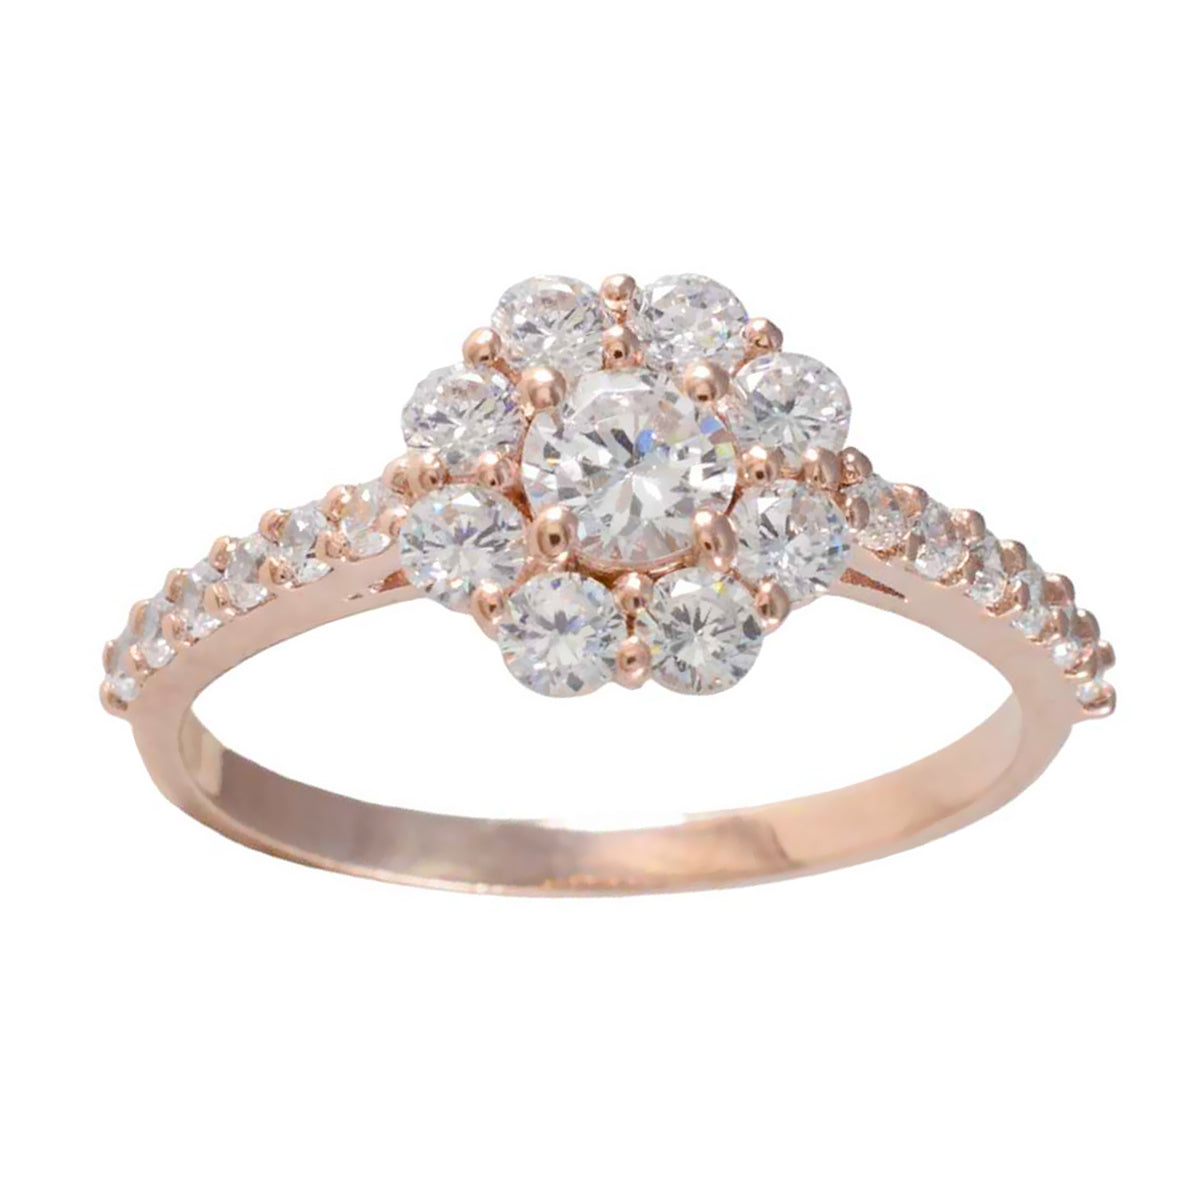 Riyo suministra anillo de plata con chapado en oro rosa, piedra blanca cz, ajuste de punta redonda, joyería de moda, anillo de compromiso